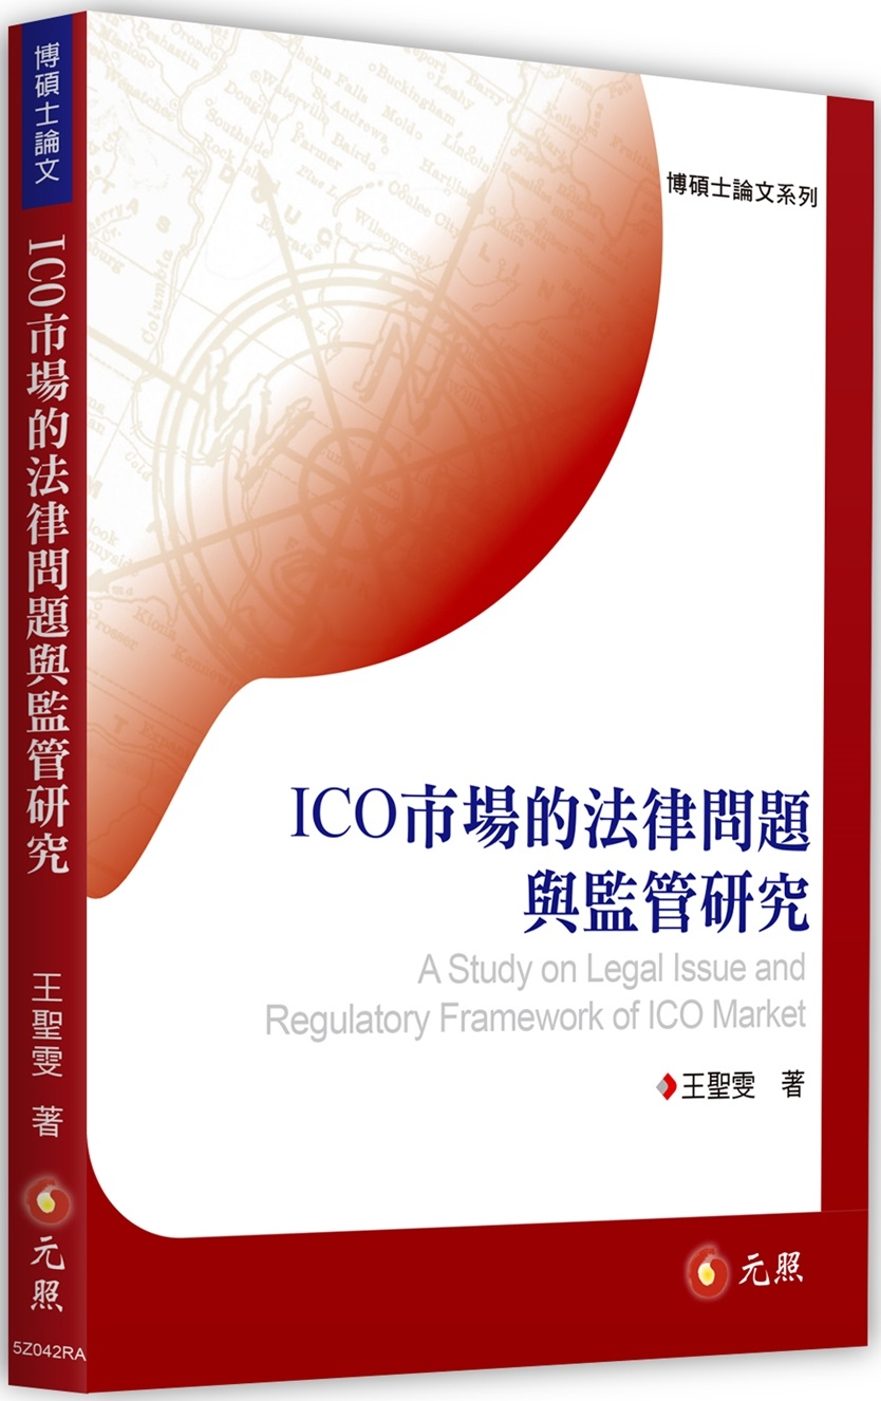 ICO市場的法律問題與監管研究